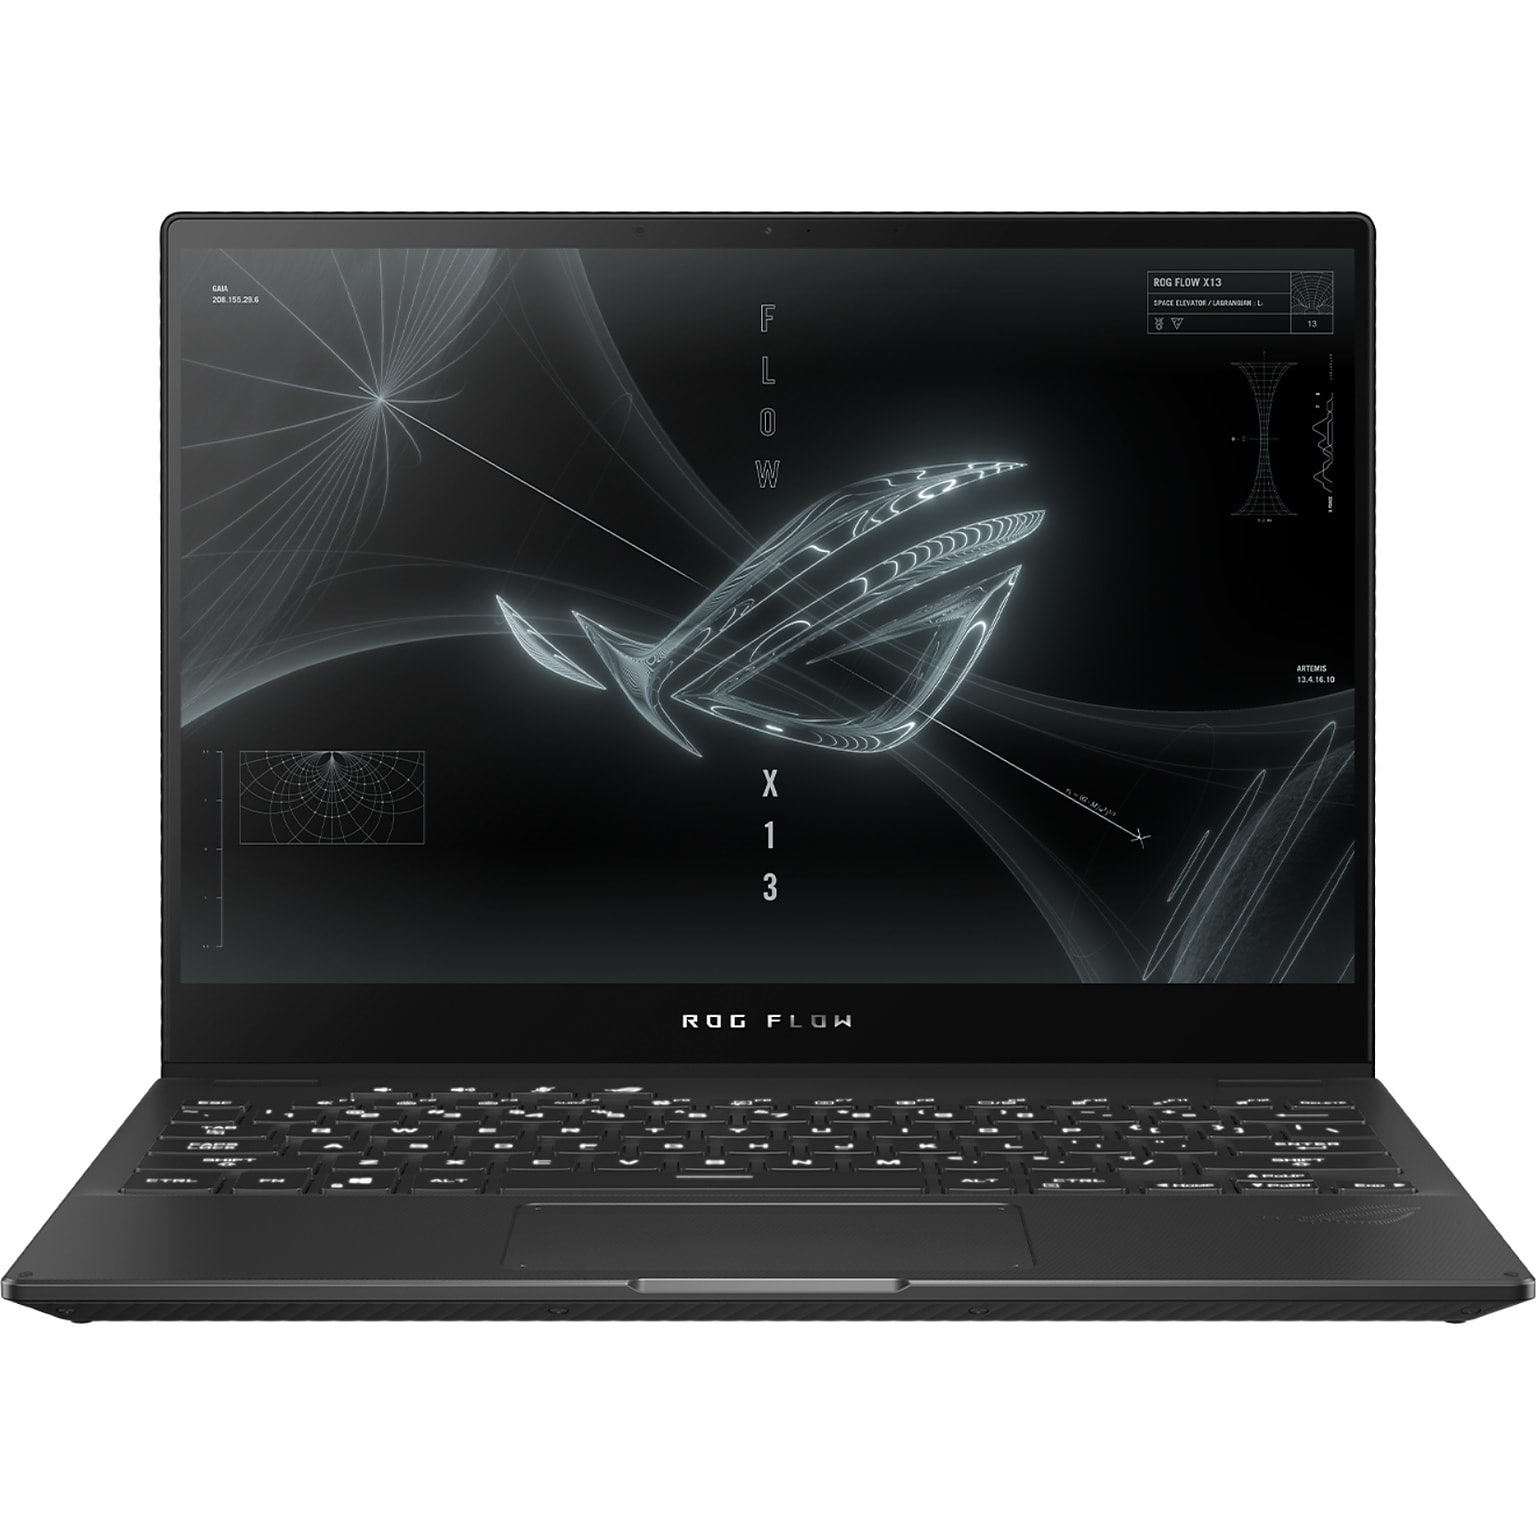 Asus ROG Flow X13 GV301 13.4 Laptop, AMD Ryzen 9 5980HS, 32GB Memory, 1TB SSD, Windows 10 Pro (GV301QH-XS98-B)